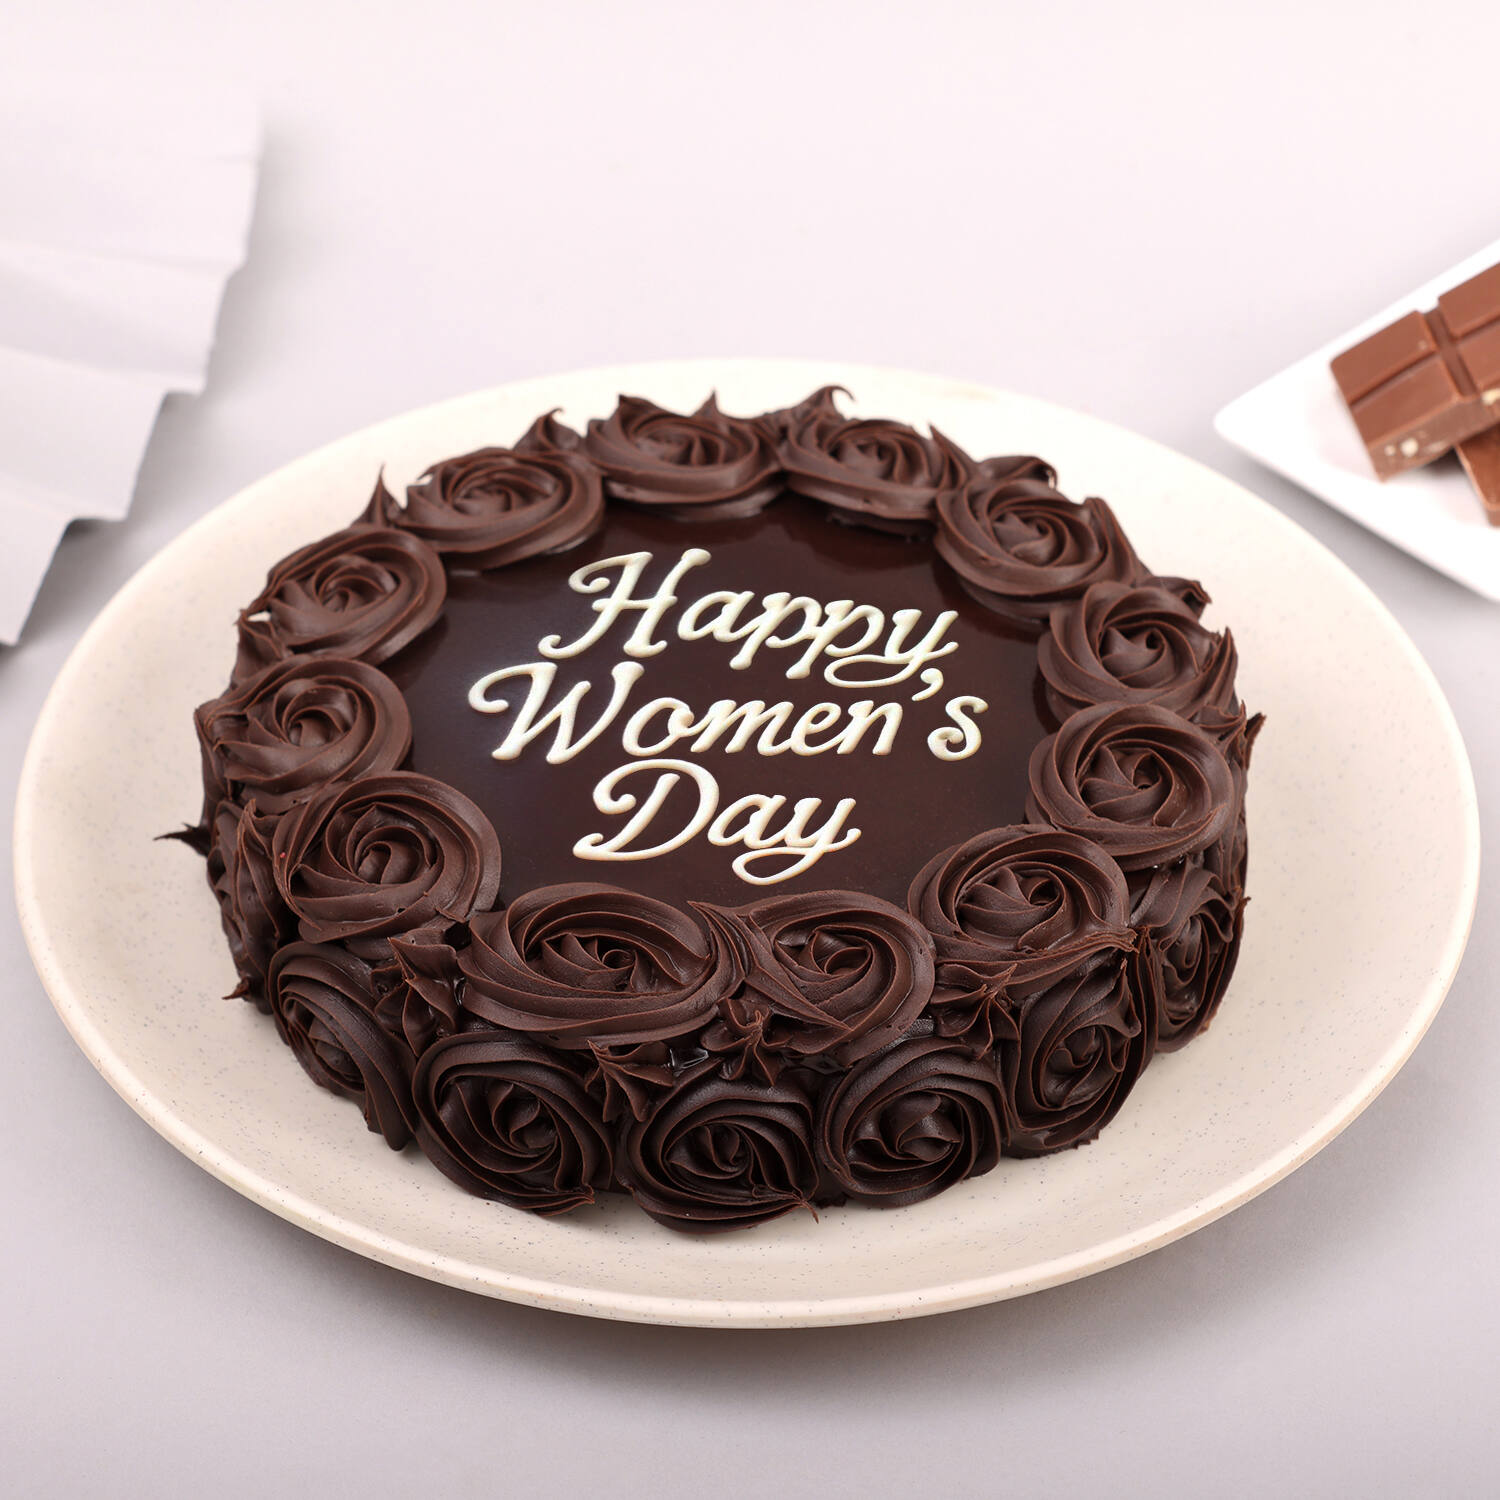 Women's Day Theme - The cake fairy